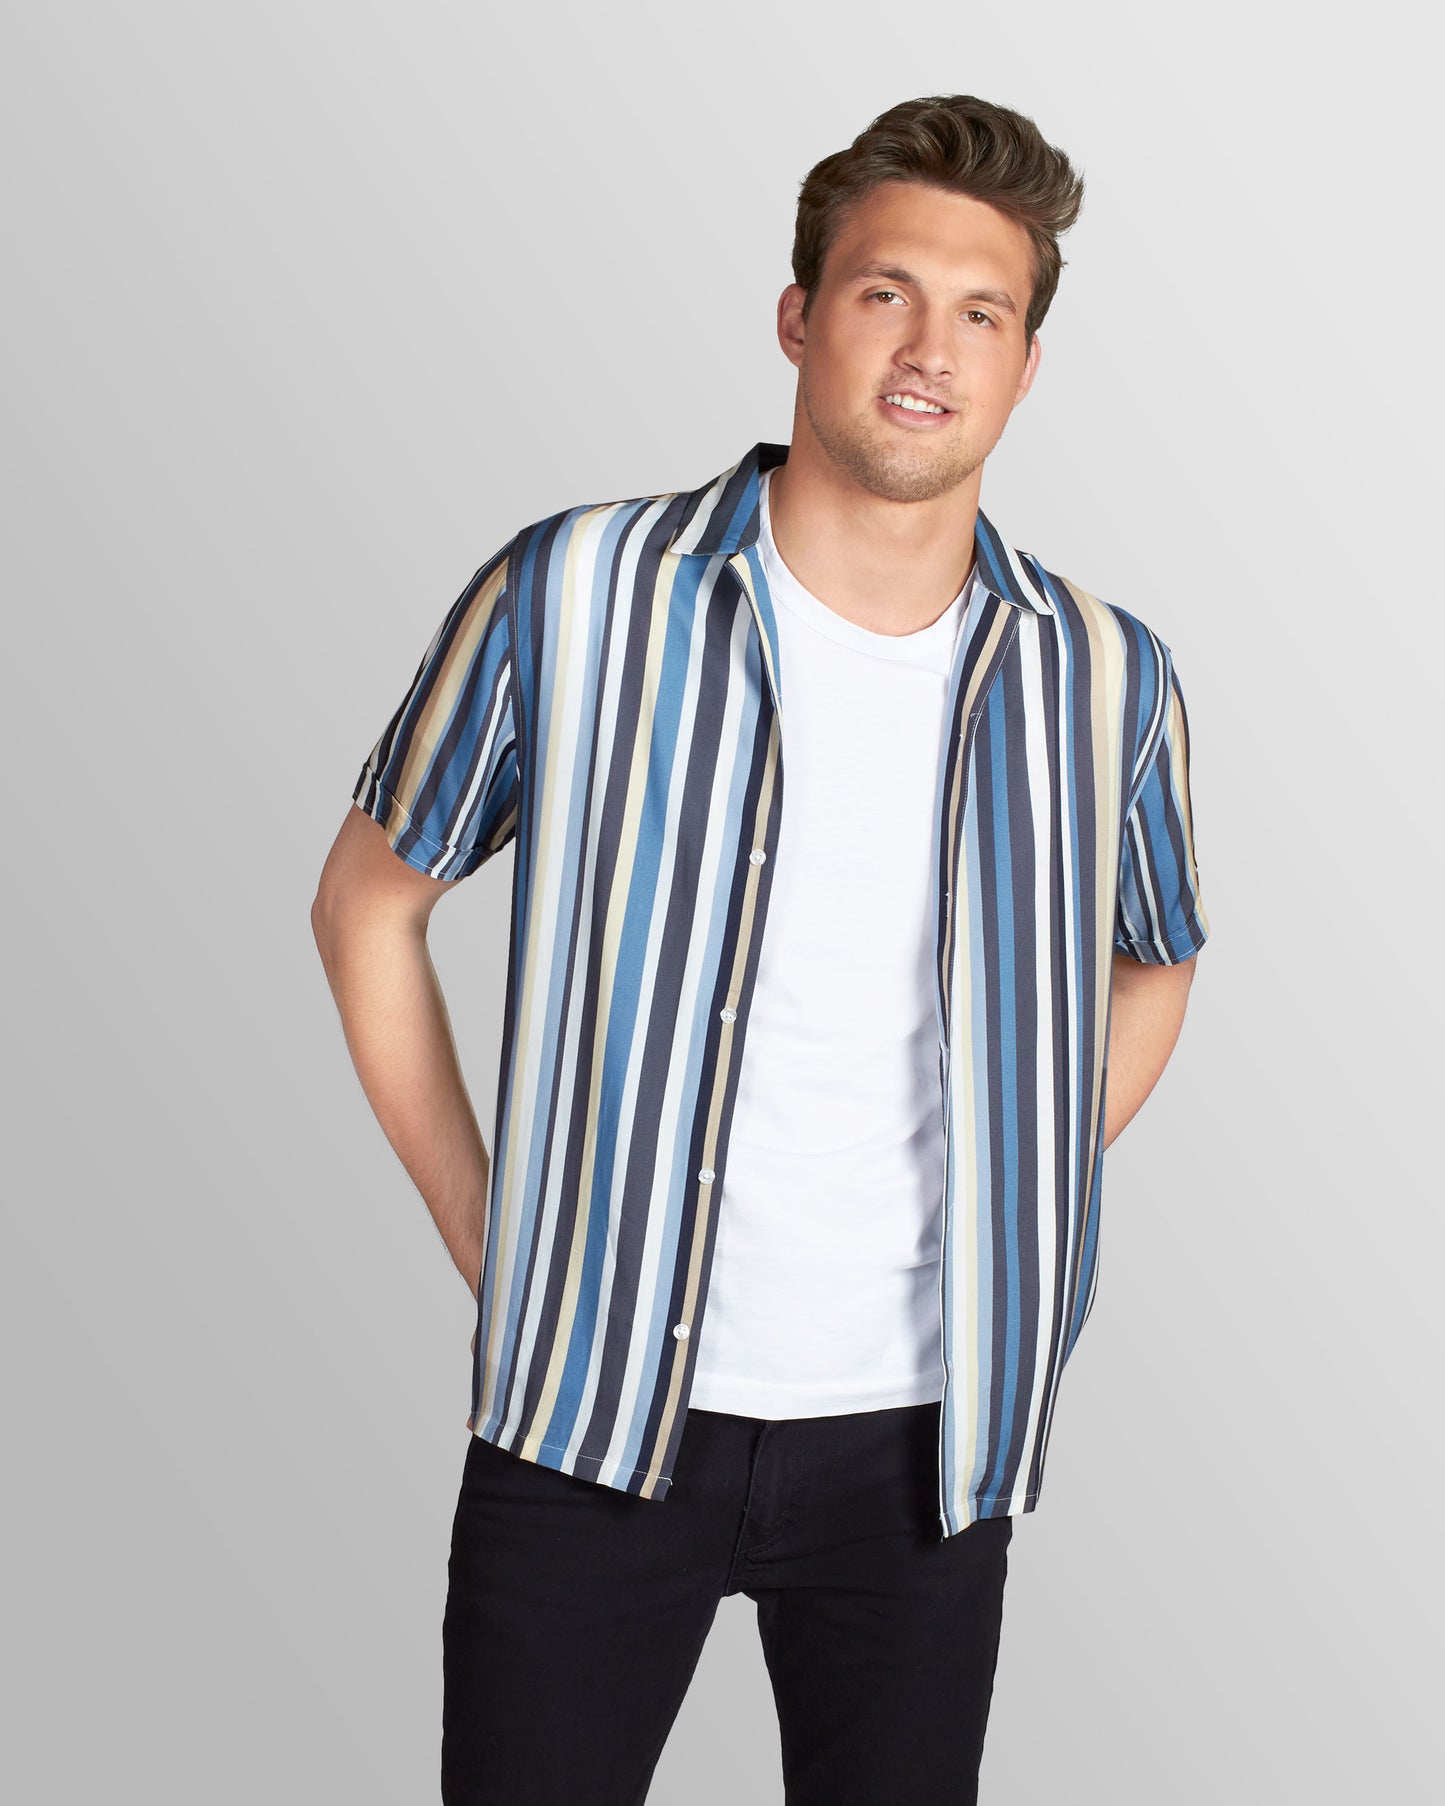 Chromatic Stripe Camp Shirt, Blue